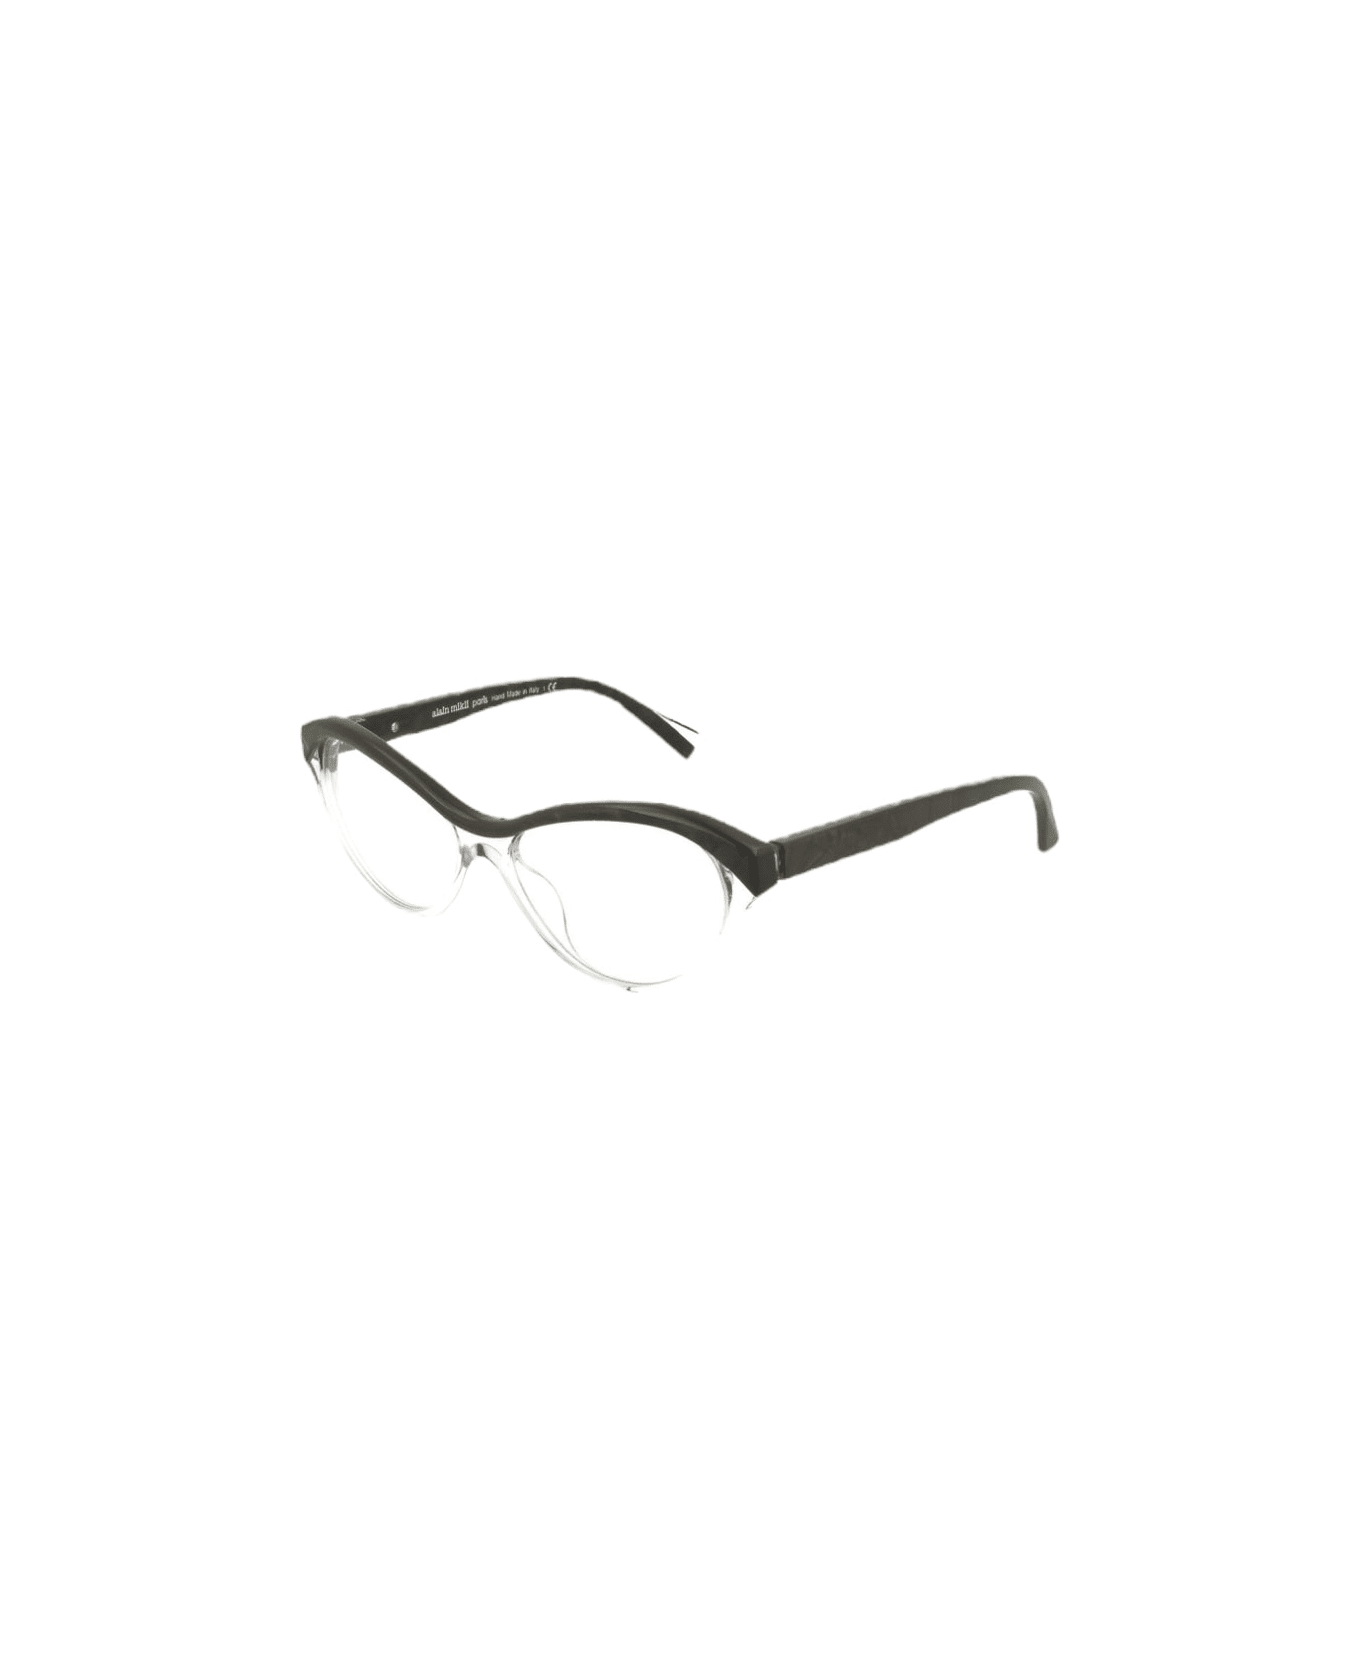 Alain Mikli Leandre - A0312b - Black / Crystal Glasses アイウェア